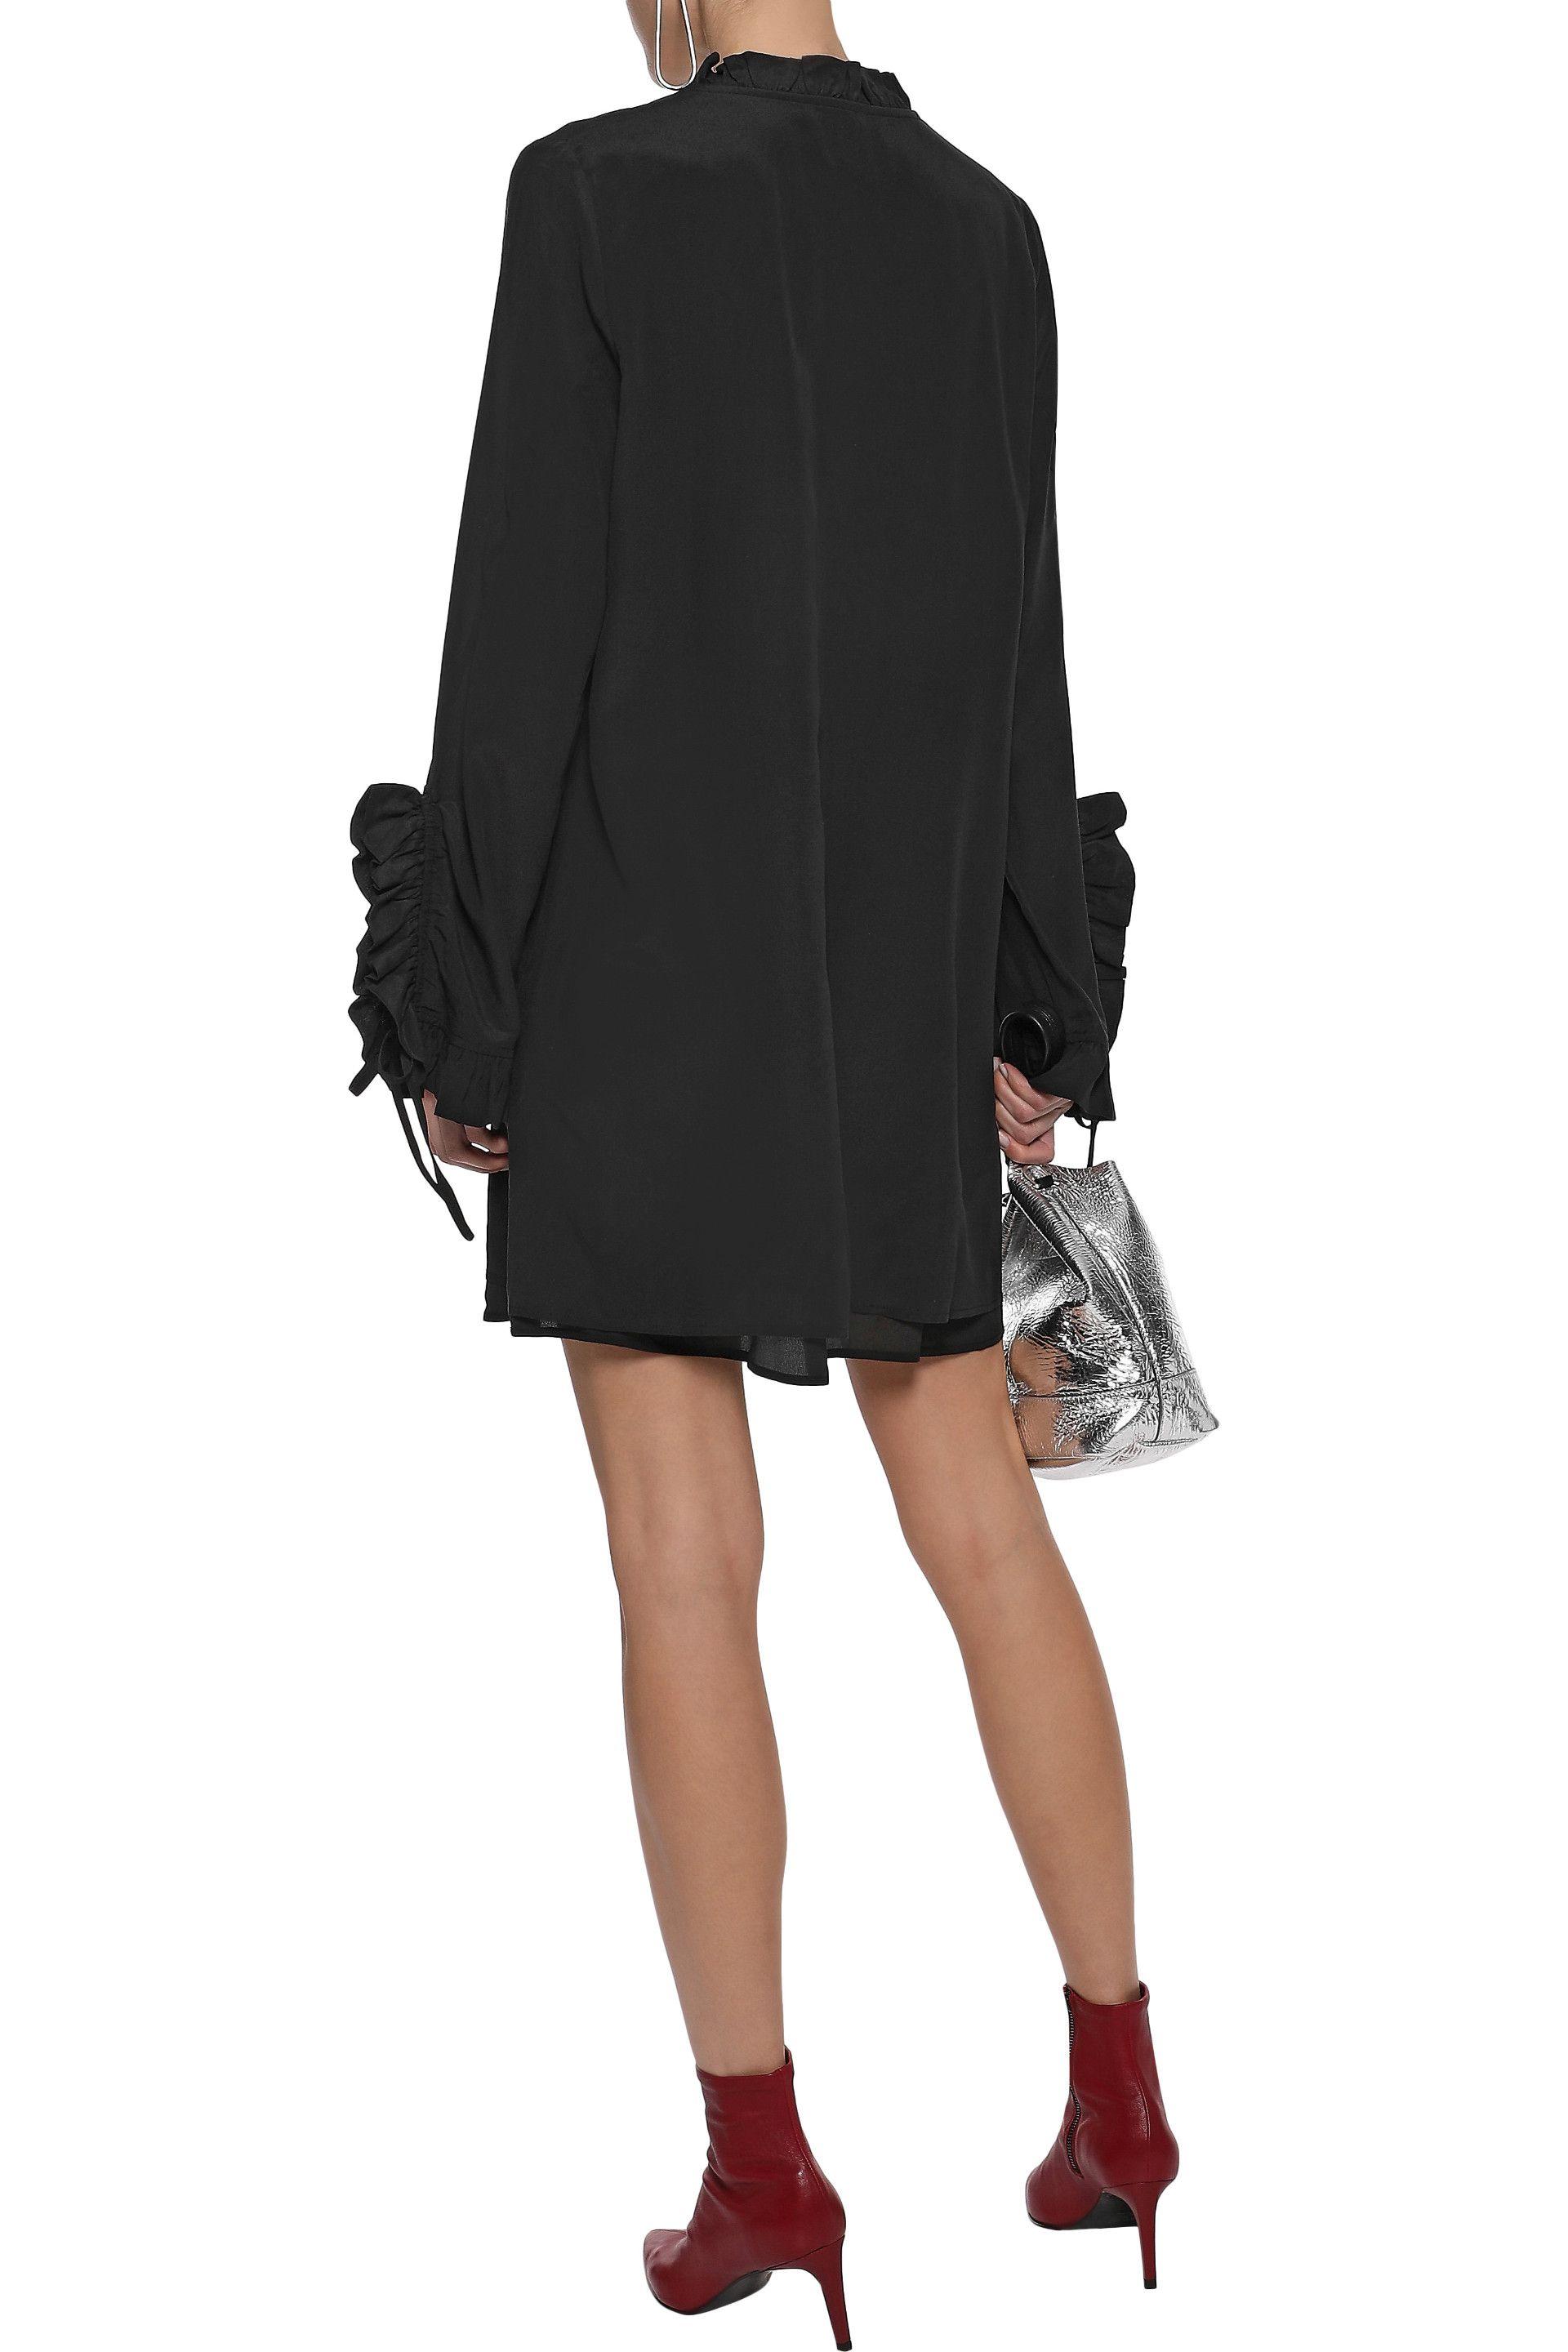 Lyst - Anine Bing Woman Ruffle-trimmed Washed-silk Mini Dress Black in ...